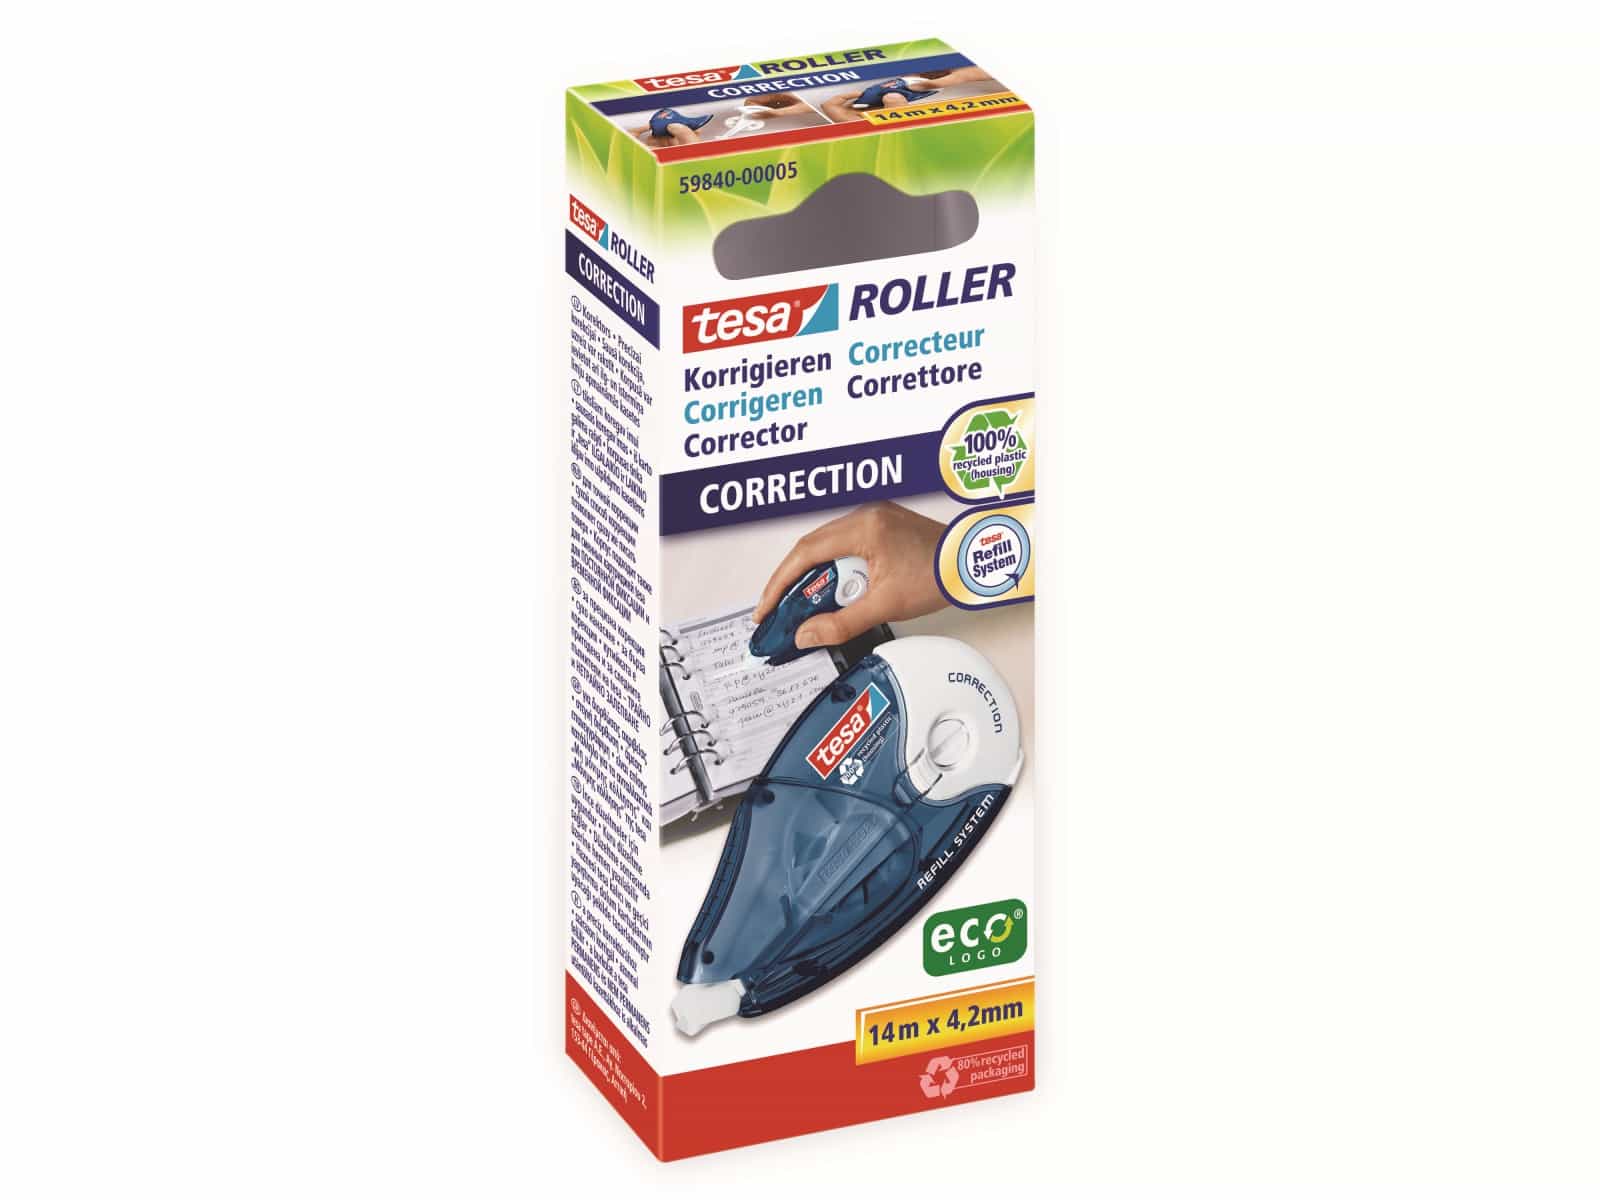 TESA Roller Korrigieren ecoLogo® Nachfüllroller, 14m:4,2mm, 59840-00005-05